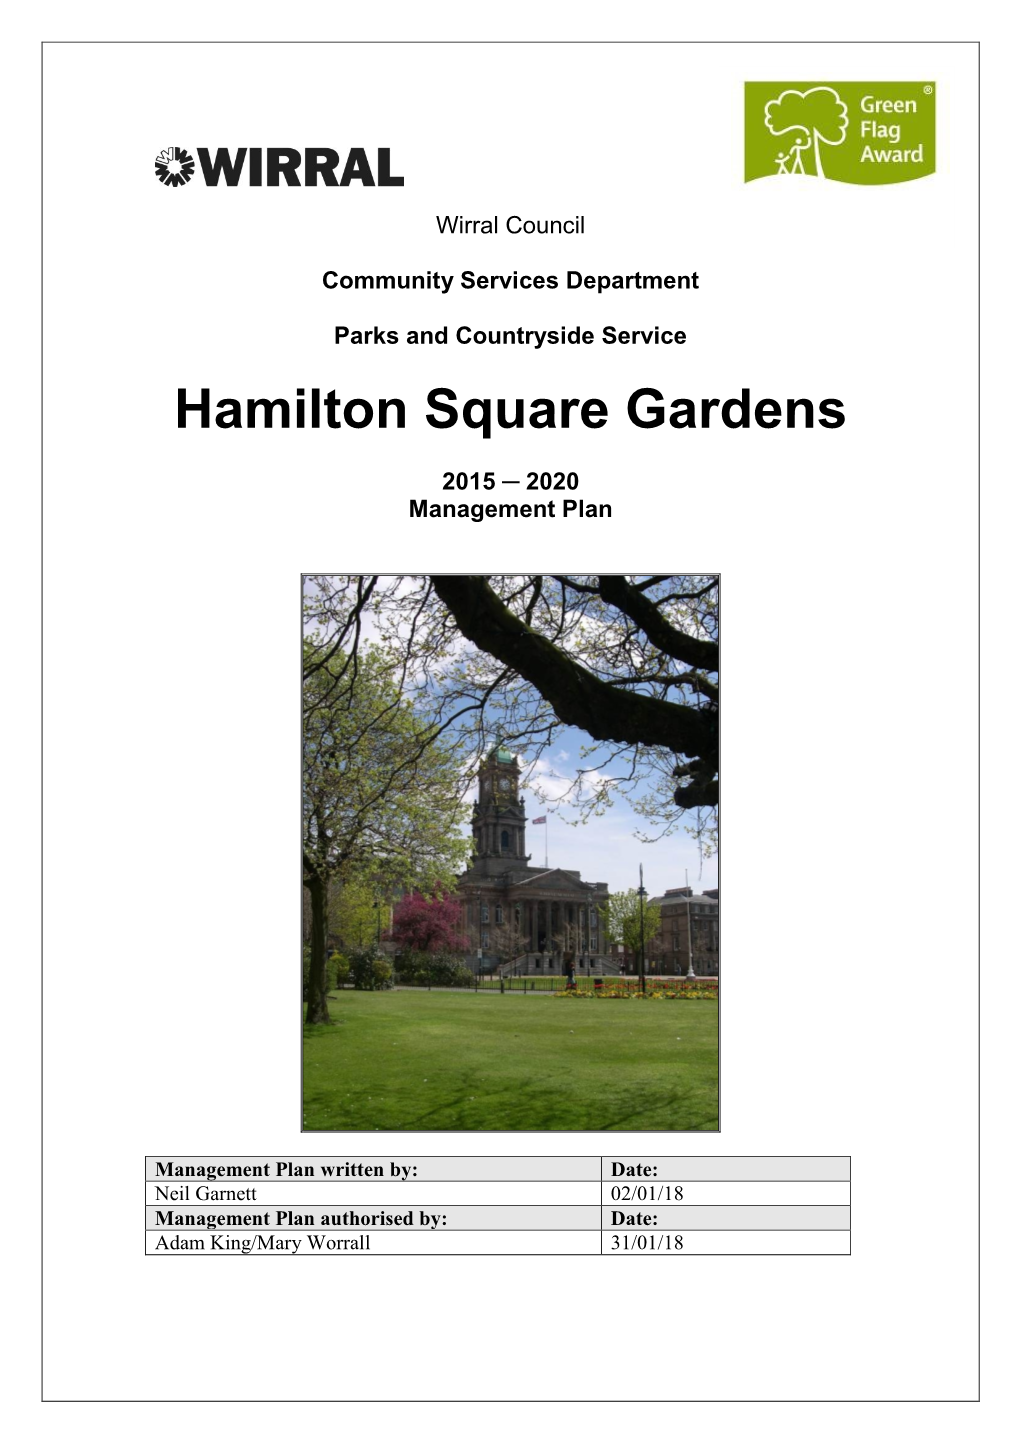 Hamilton Square Gardens Management Plan 2015-2020